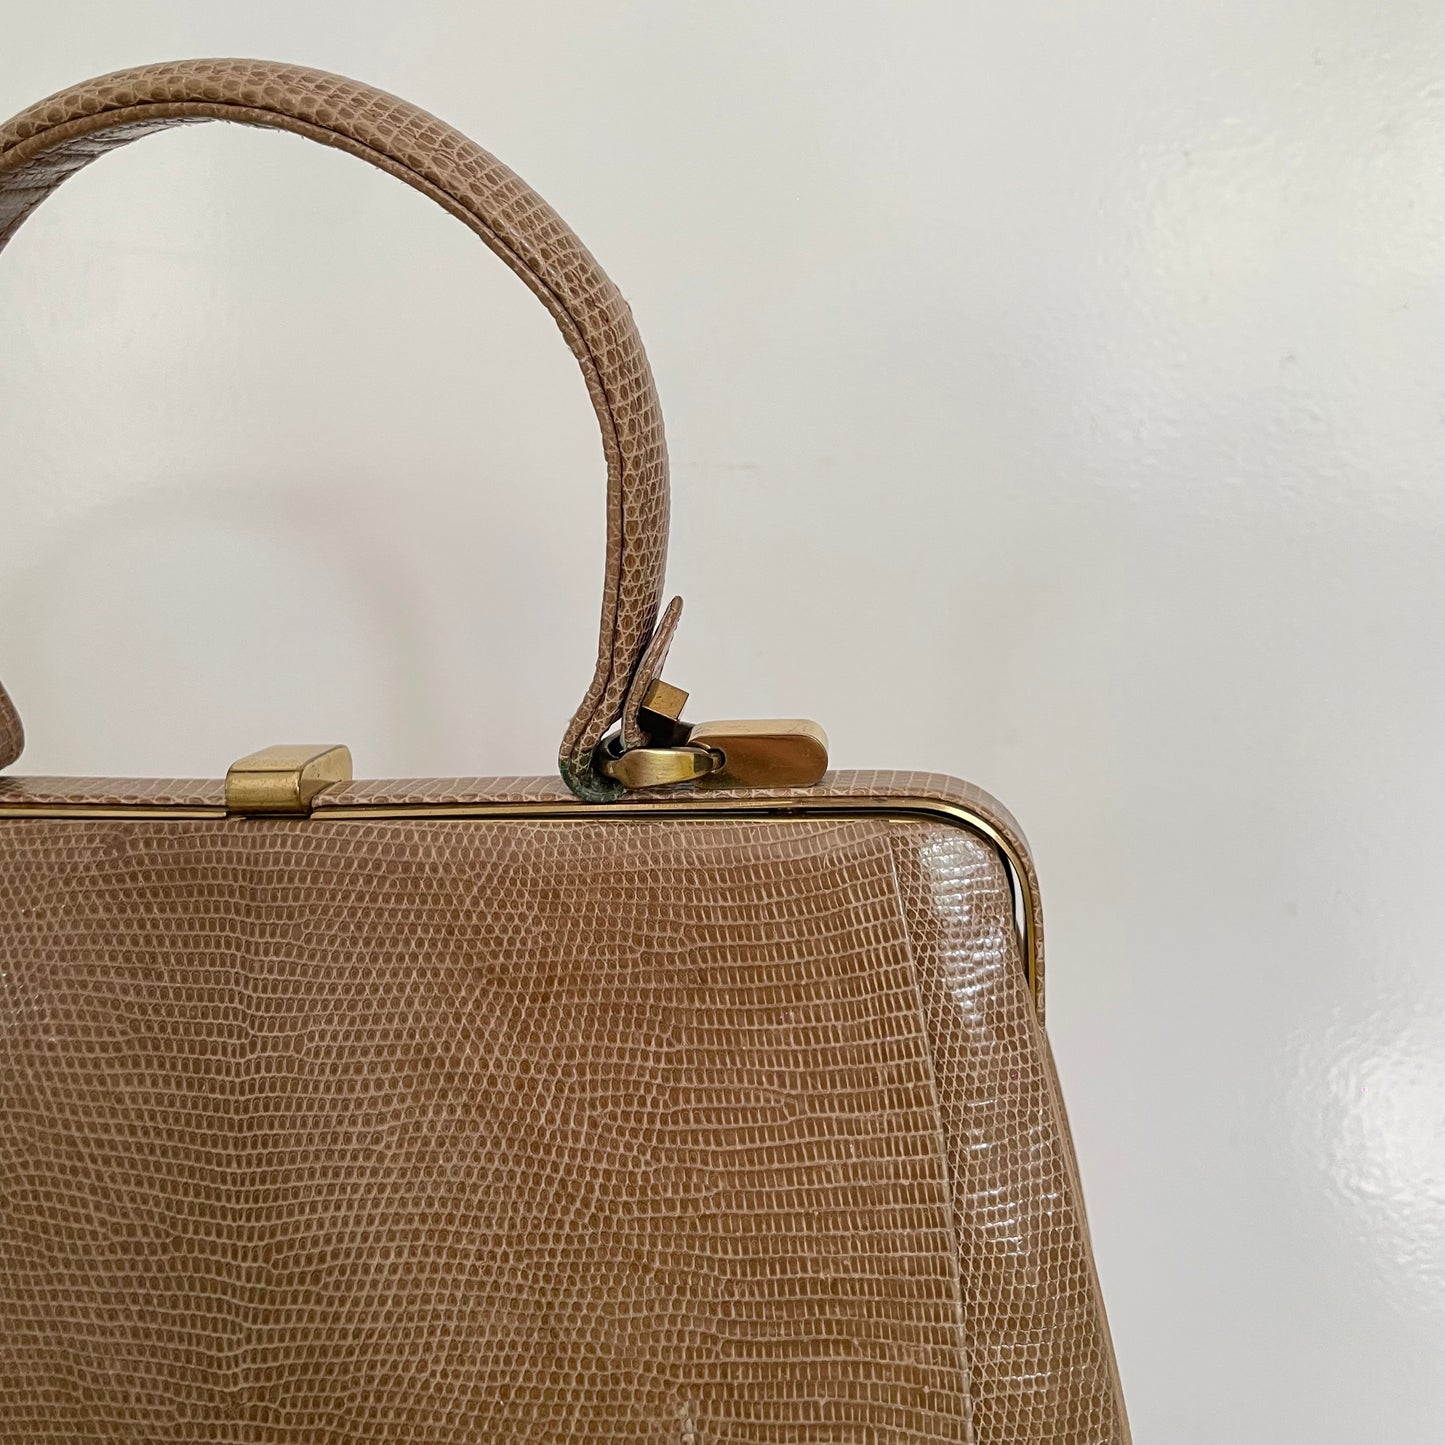 Vintage 1950s Ladies frame bag in Sand made in Australia